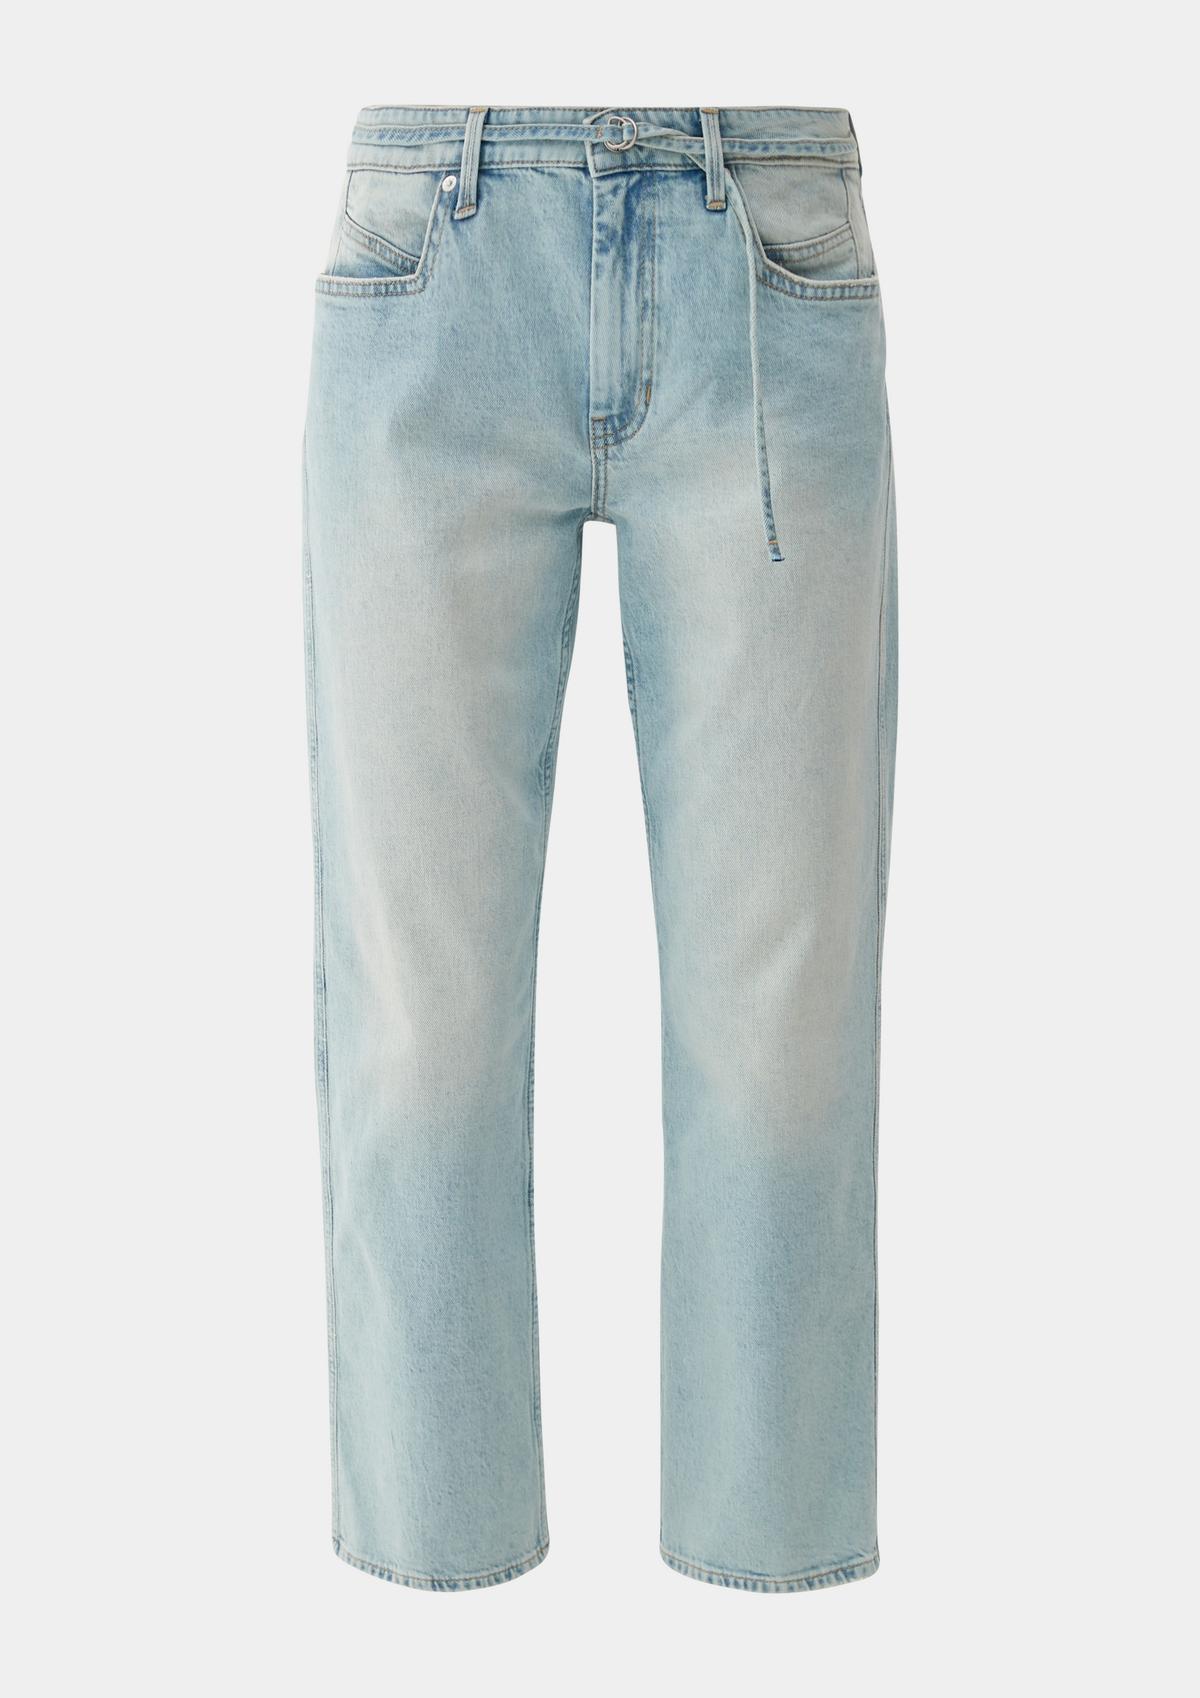 s.Oliver Karolin: five-pocket jeans with a straight leg